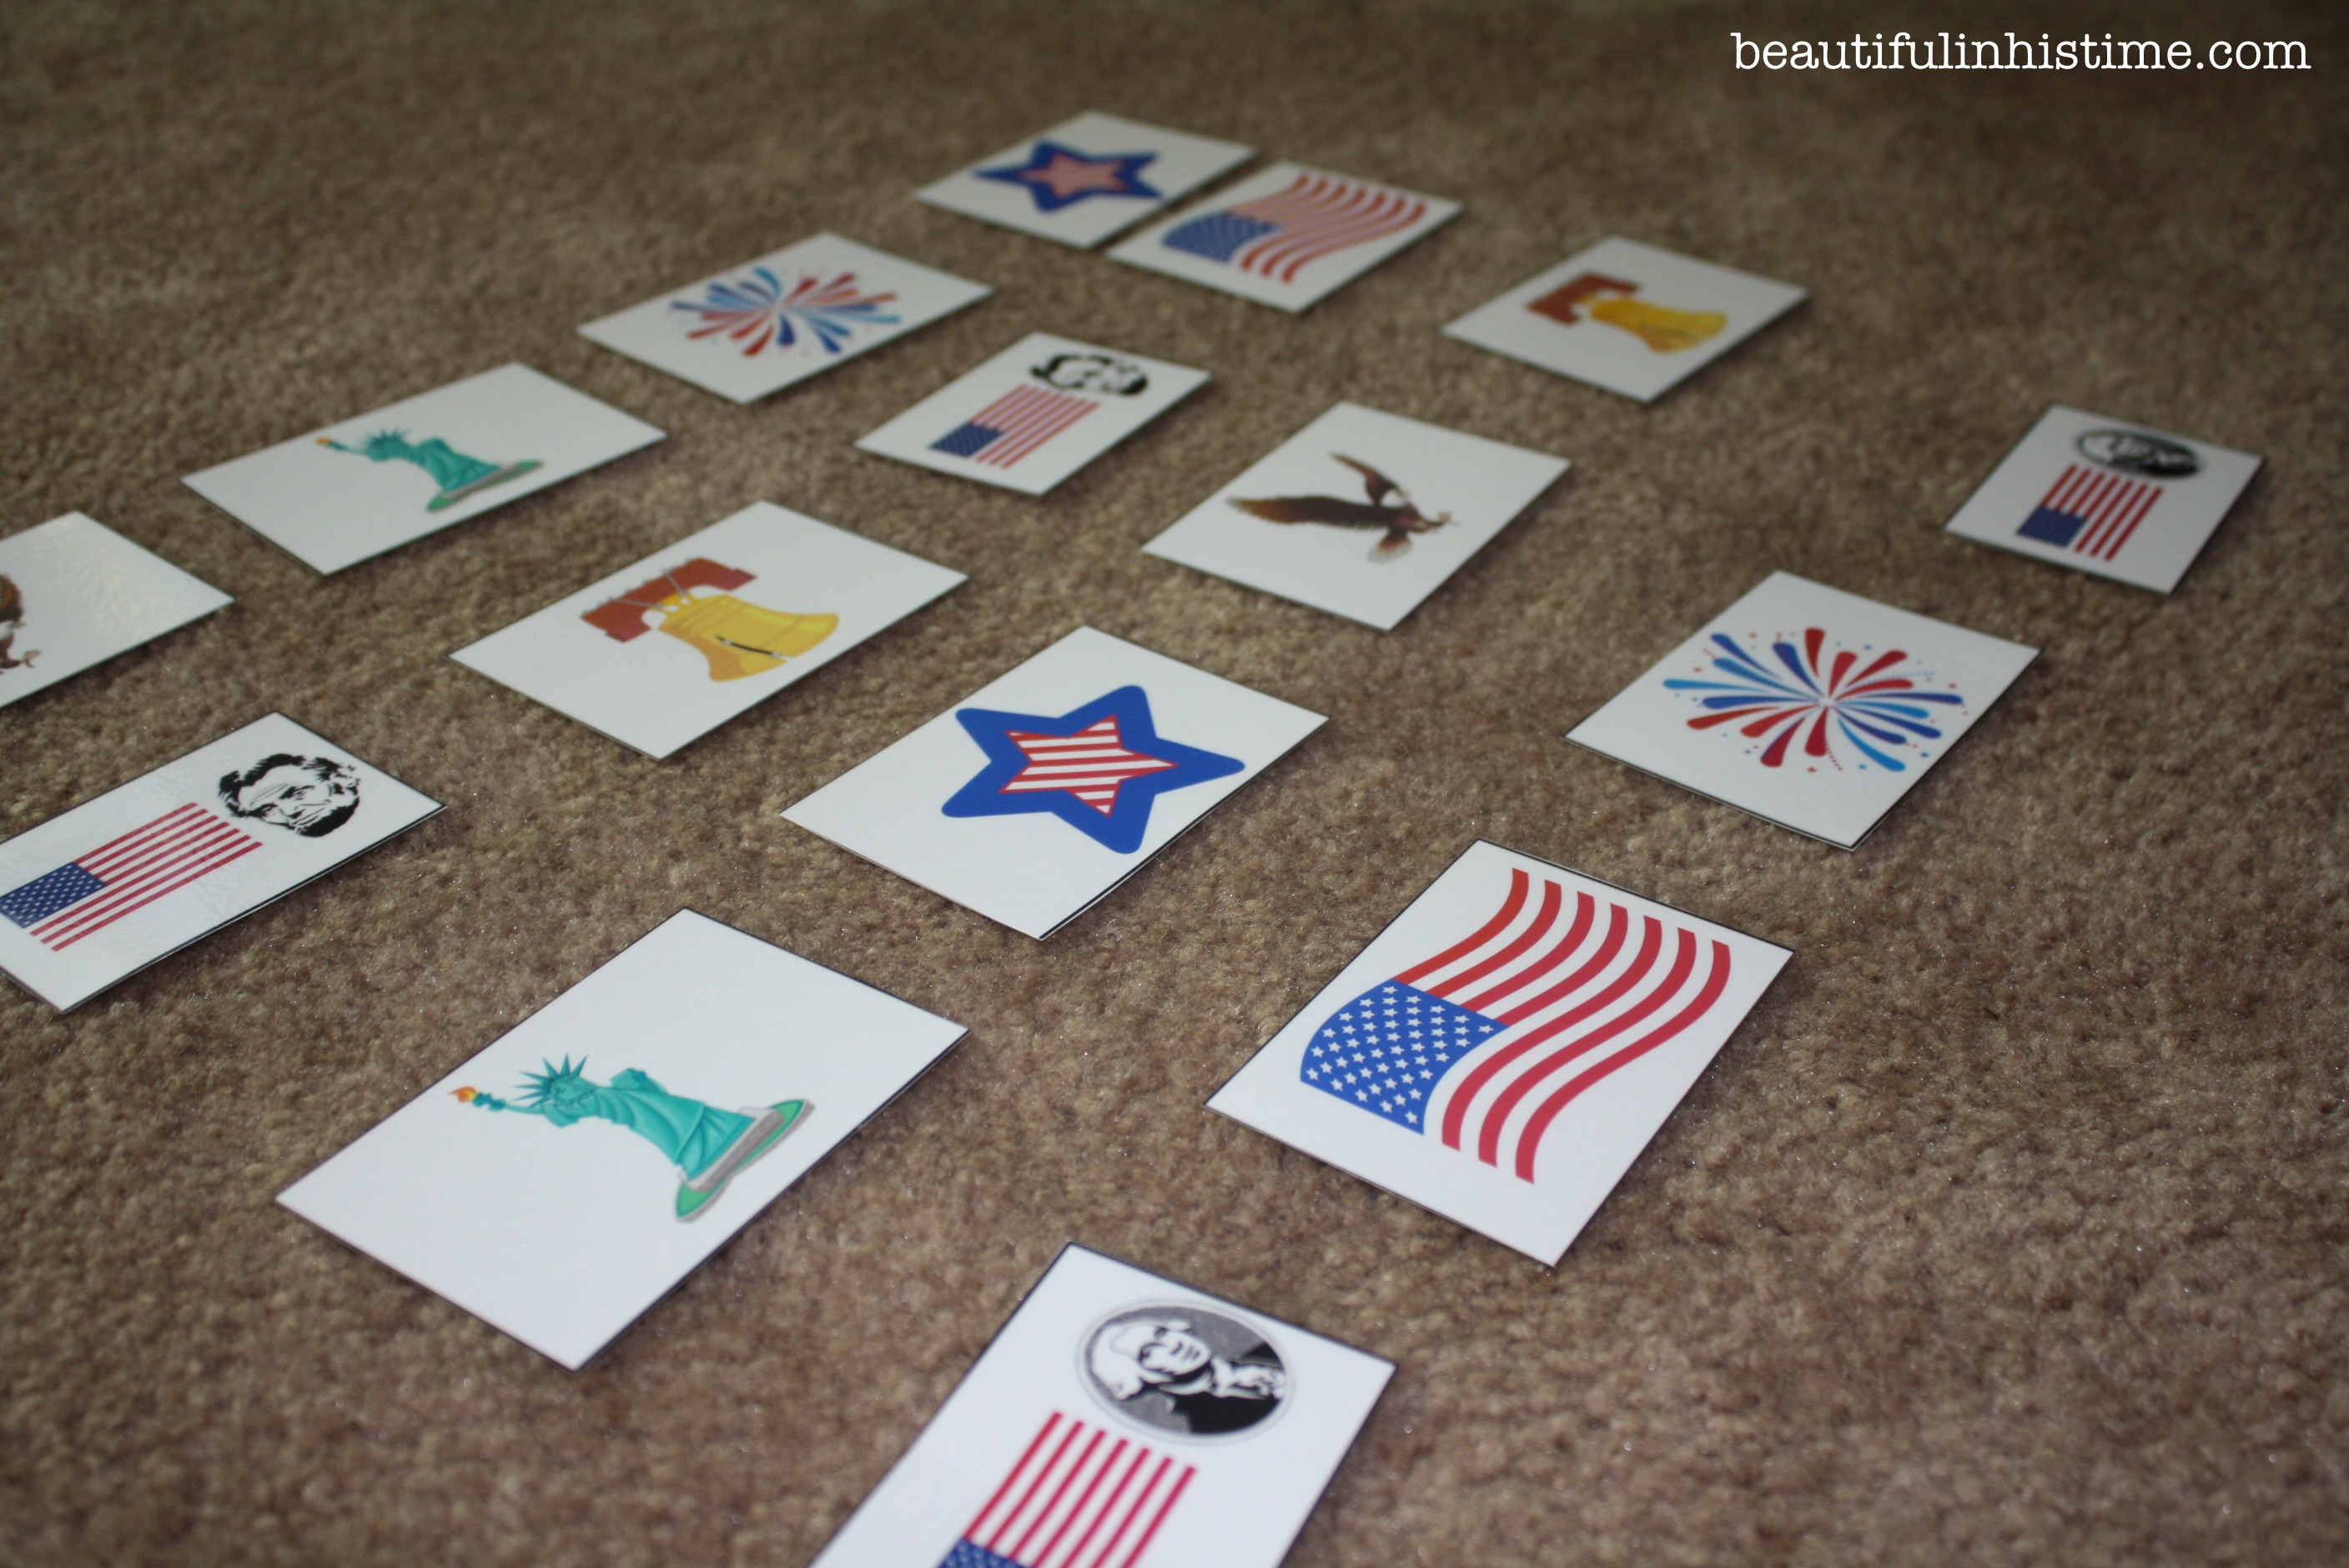 patriotic matching game flashcards #patriotic #preschool #homeschool #4thofjuly #independenceday